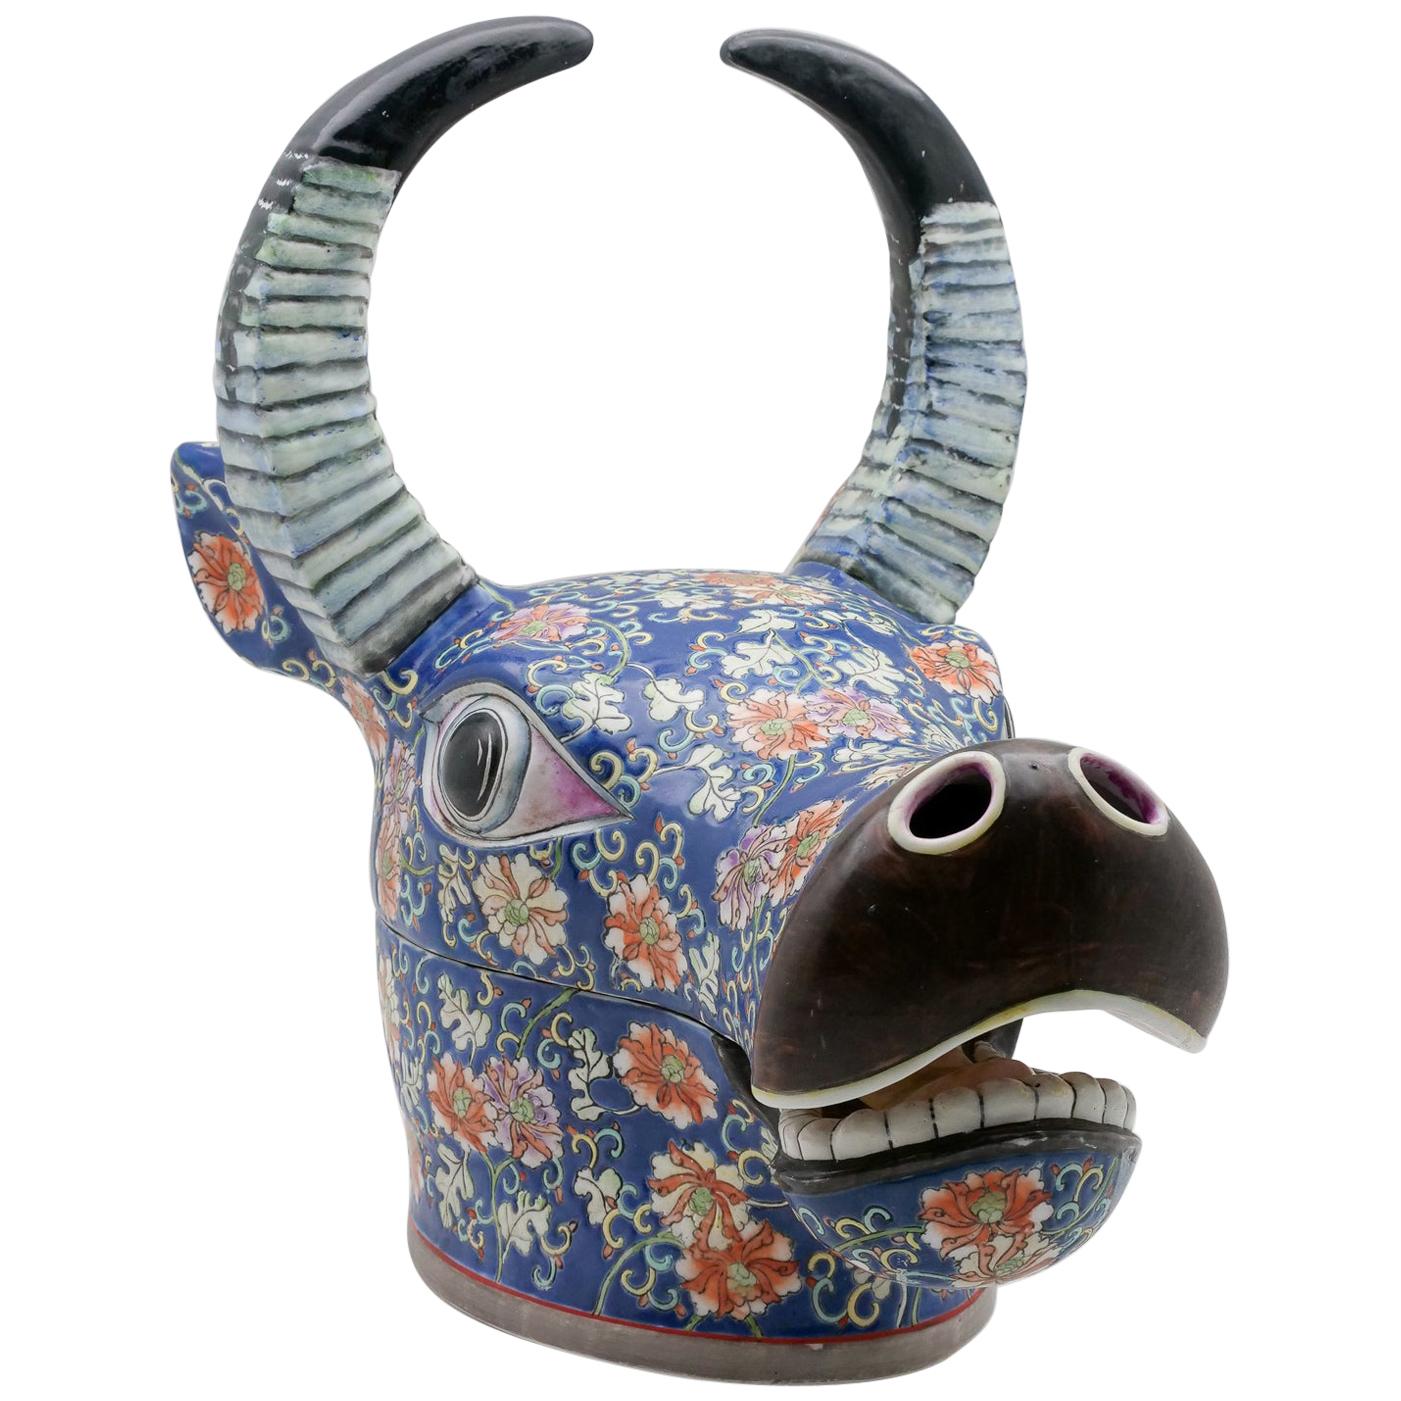 Painted Ceramic Water Buffalo Tureen